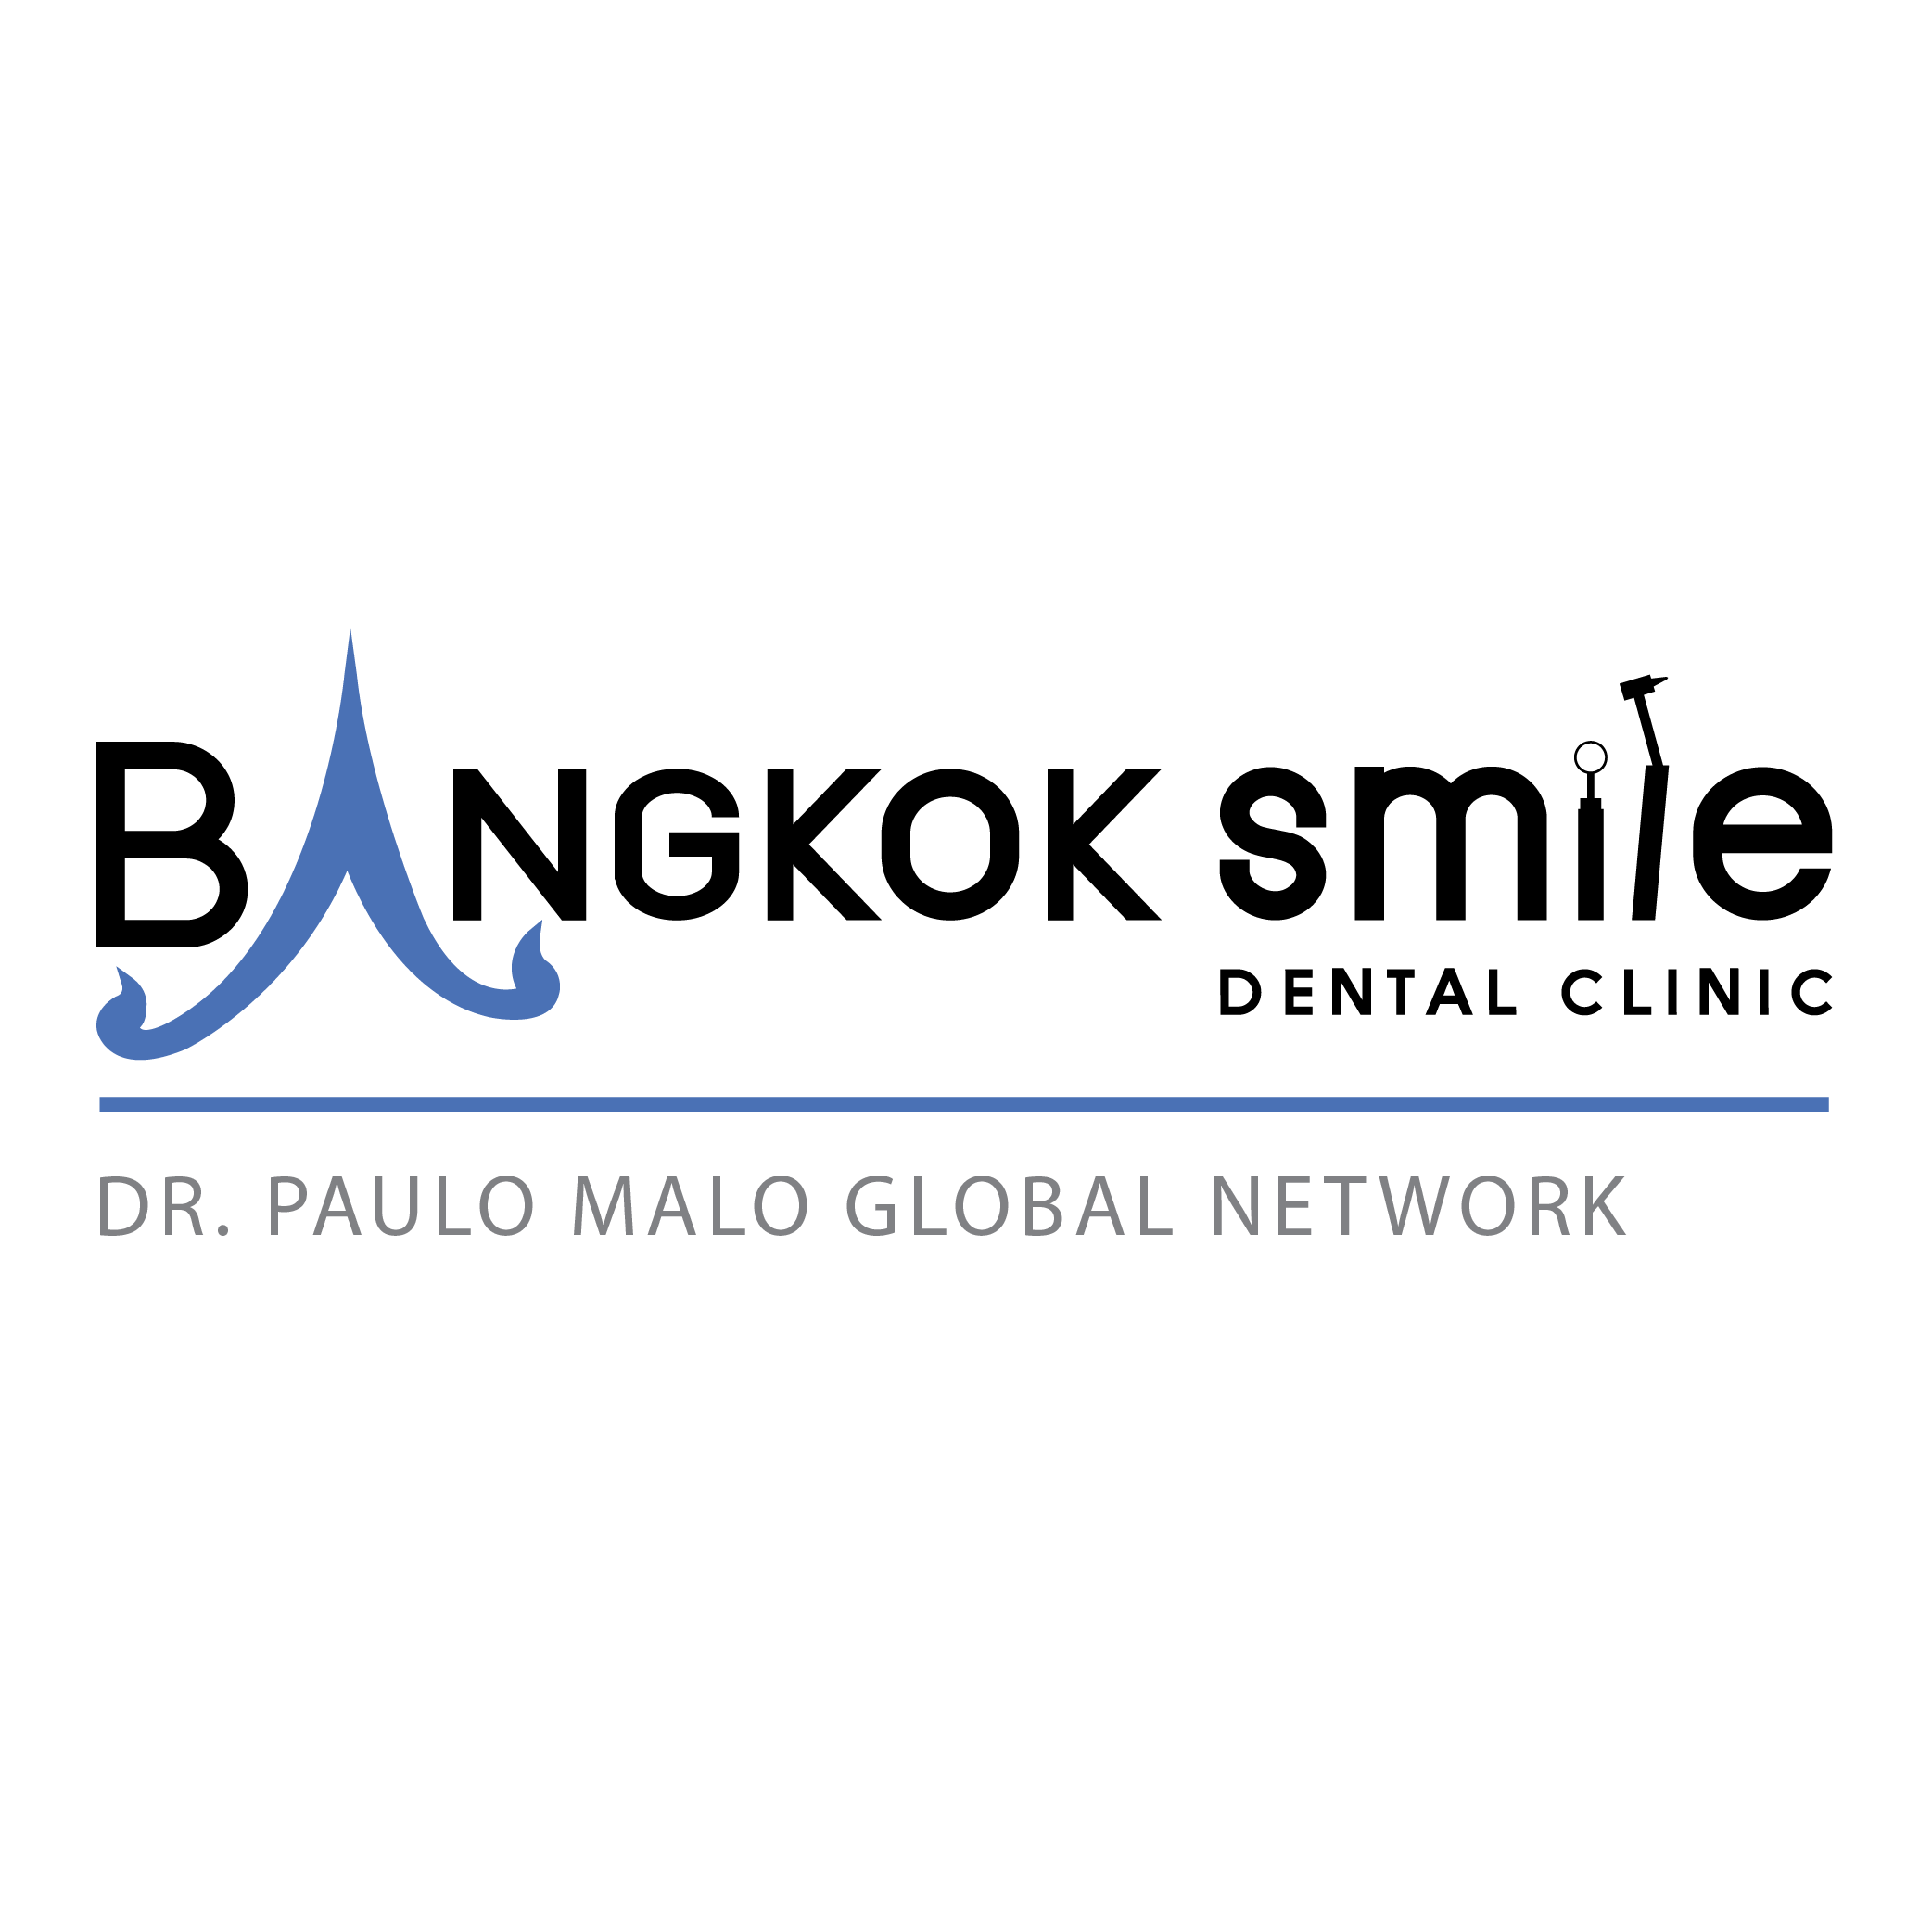 45.bangkok Smile Dental Clinic 01